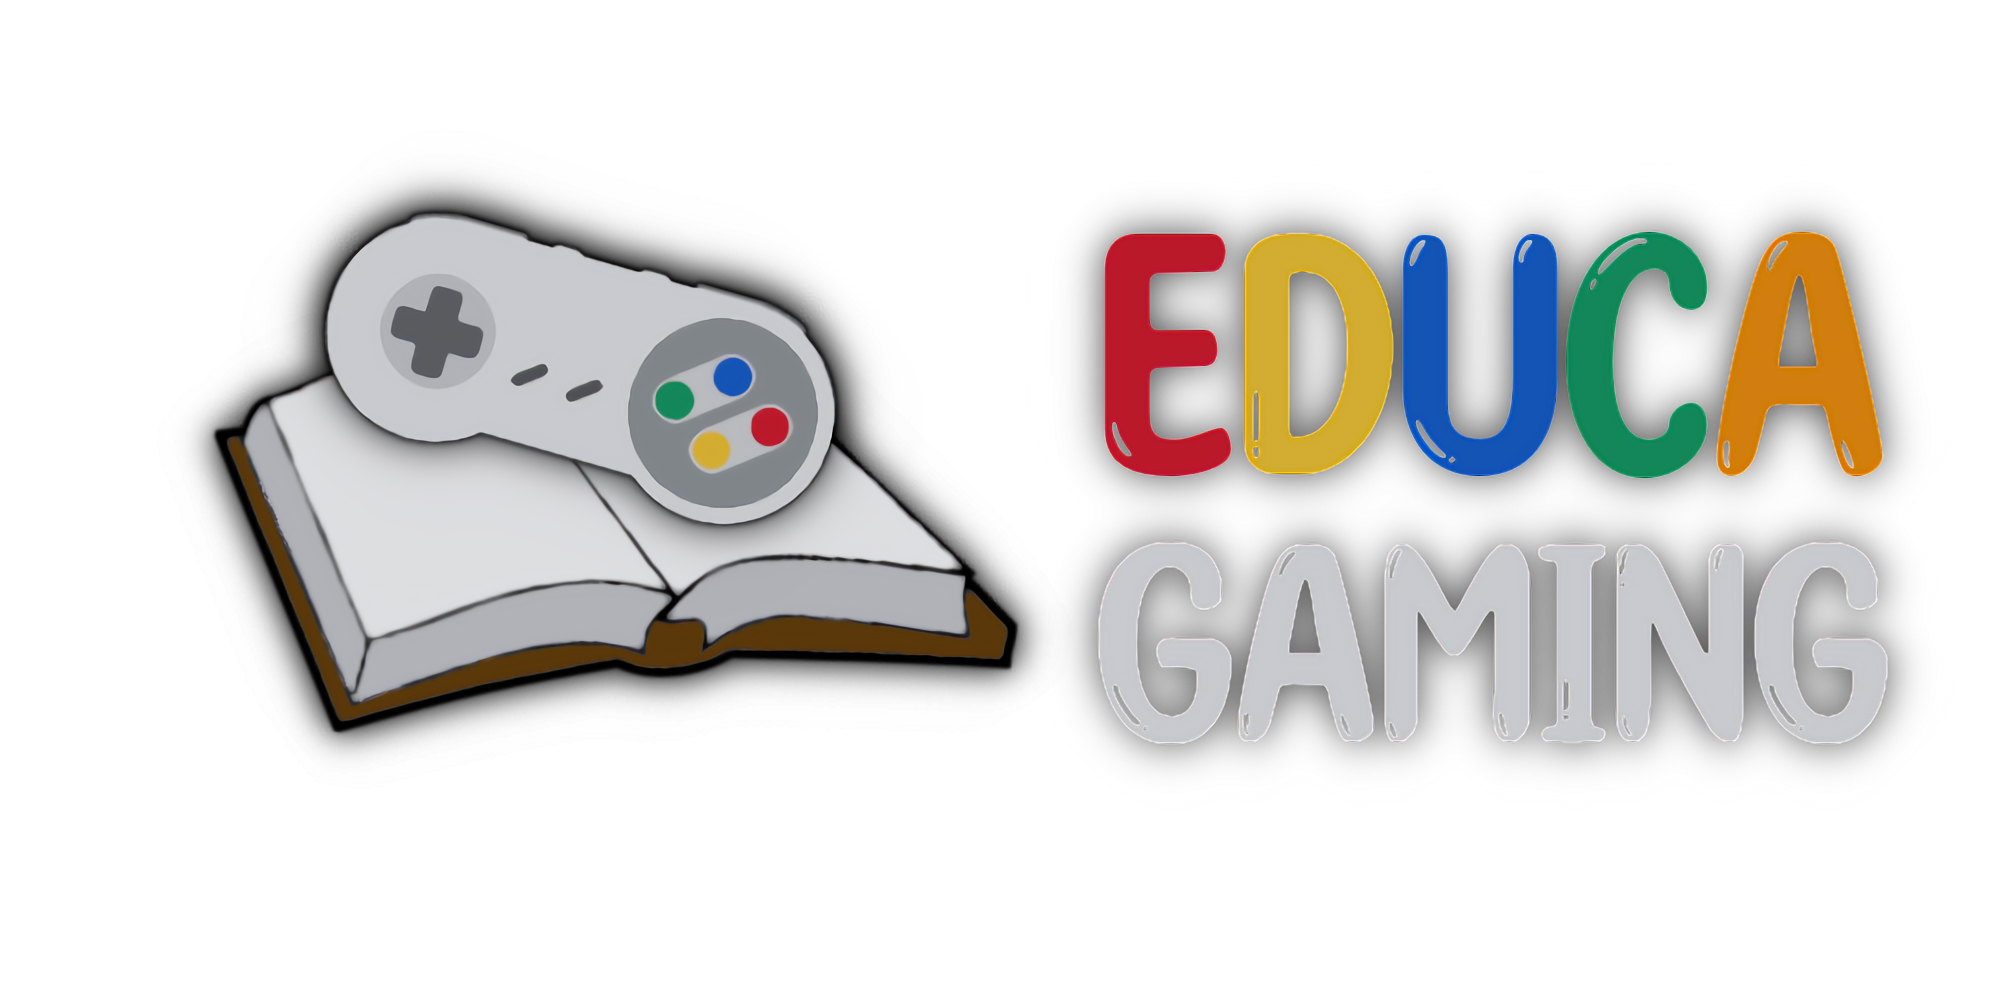 Free Educational Online Games | Educagaming.com